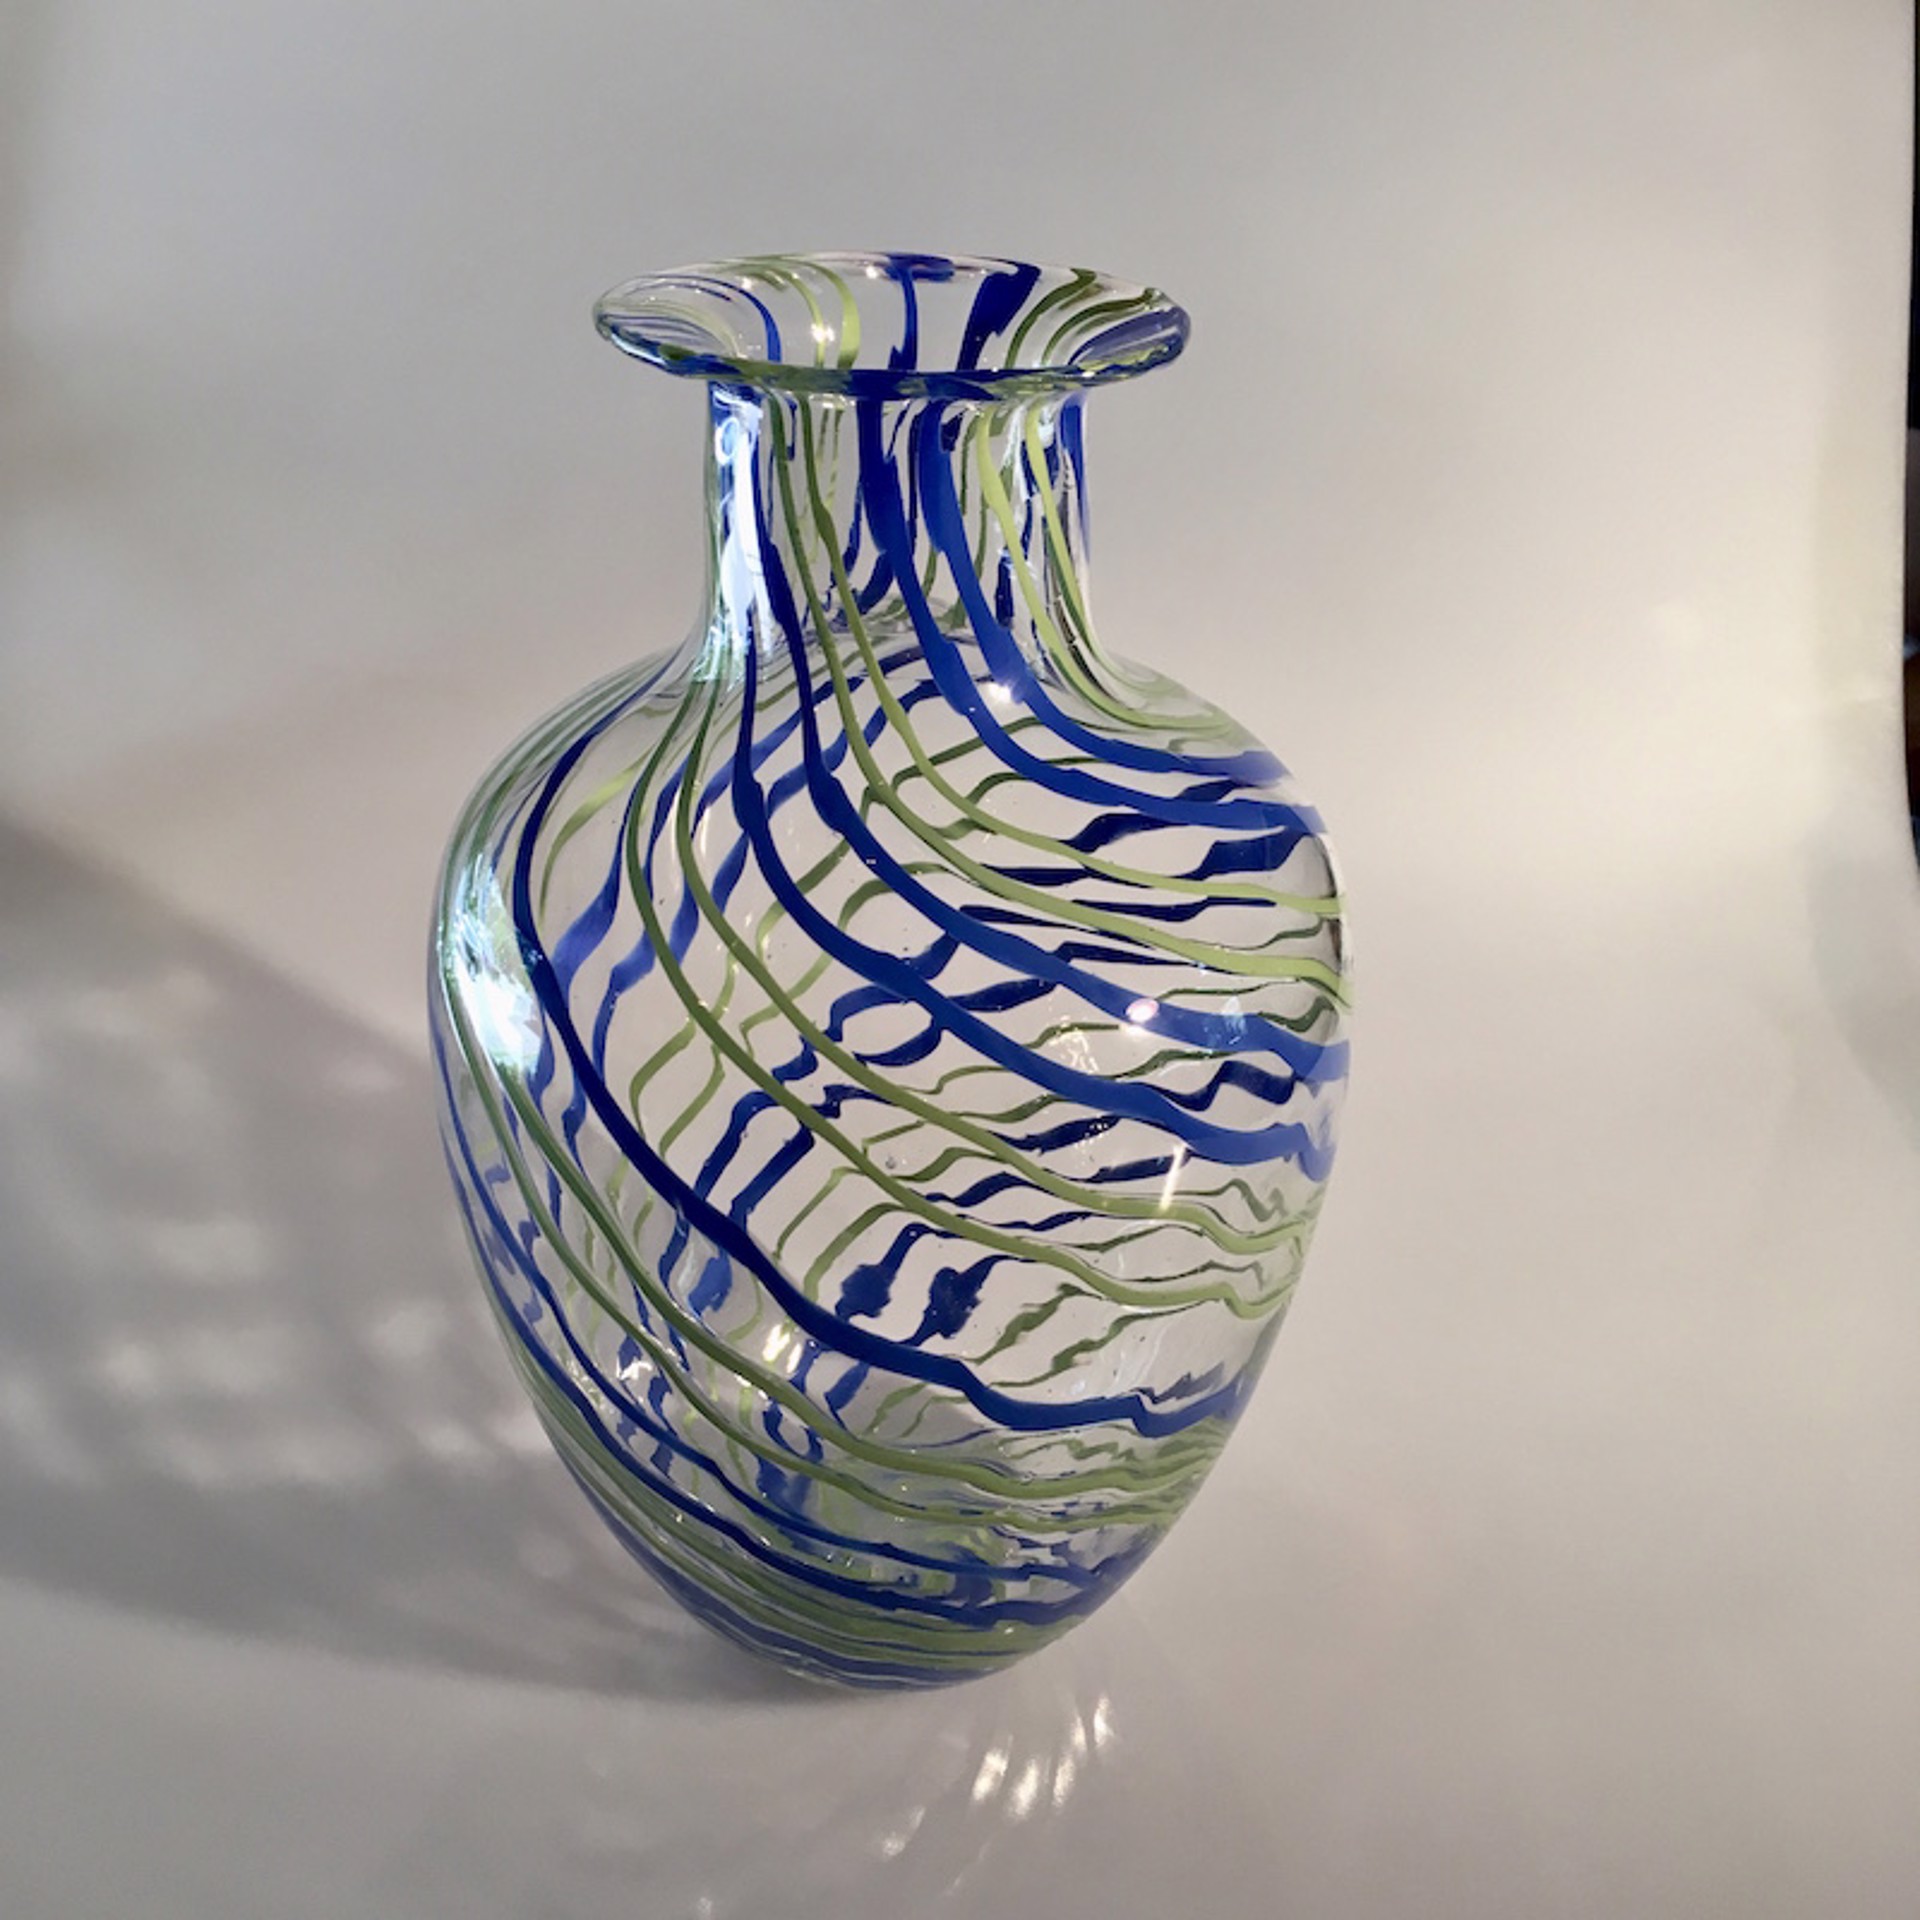 Cane Twisting Vase by Hayden MacRae